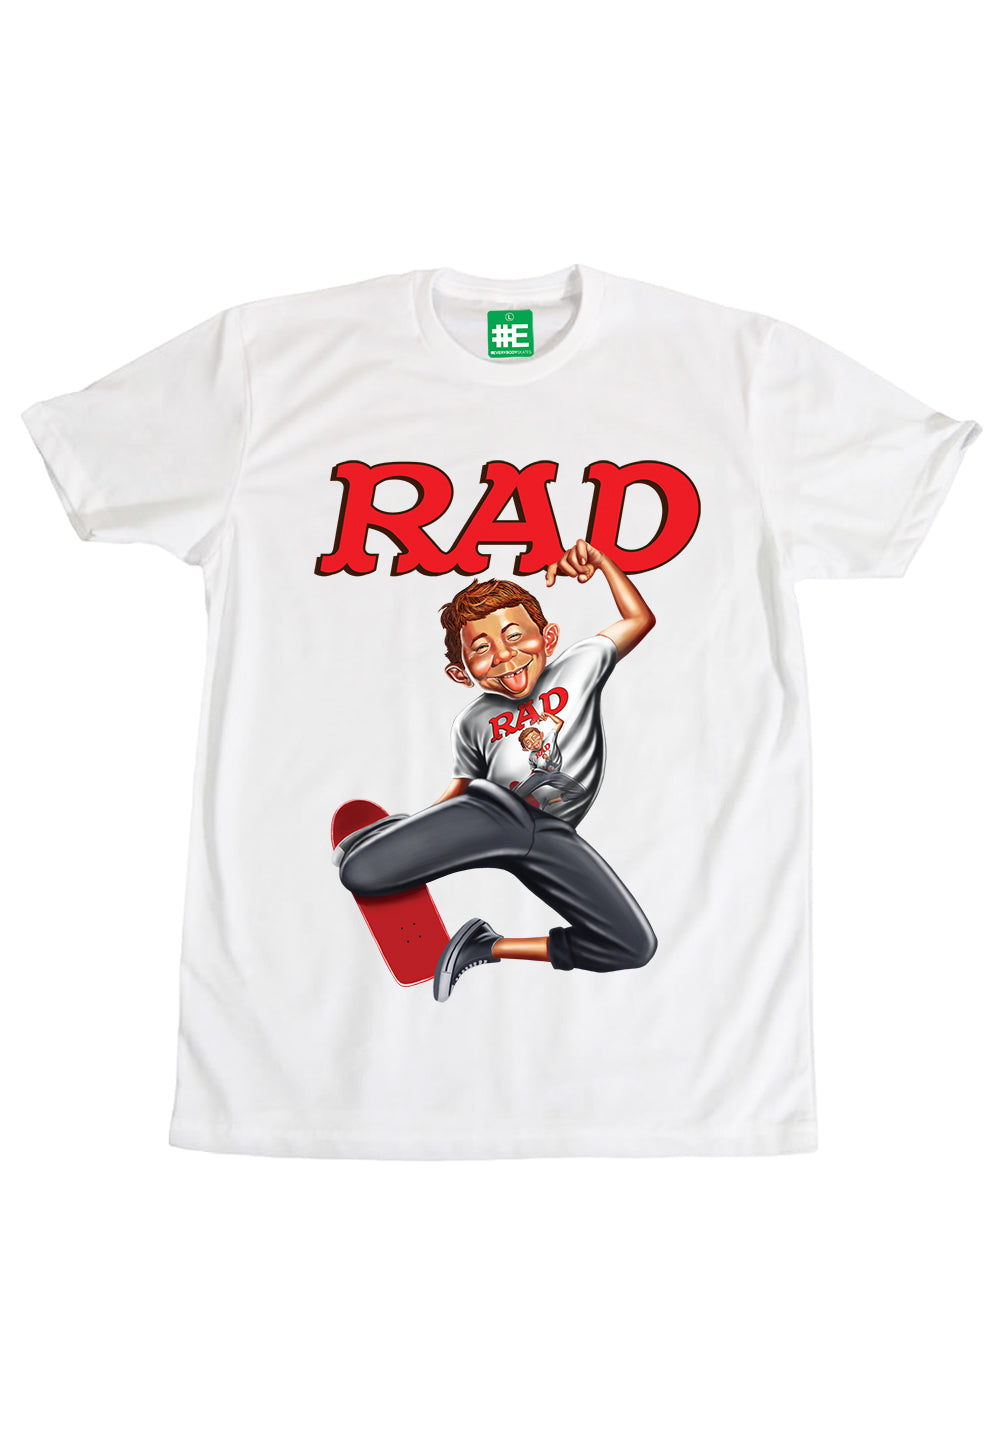 Rad Graphic T-shirt